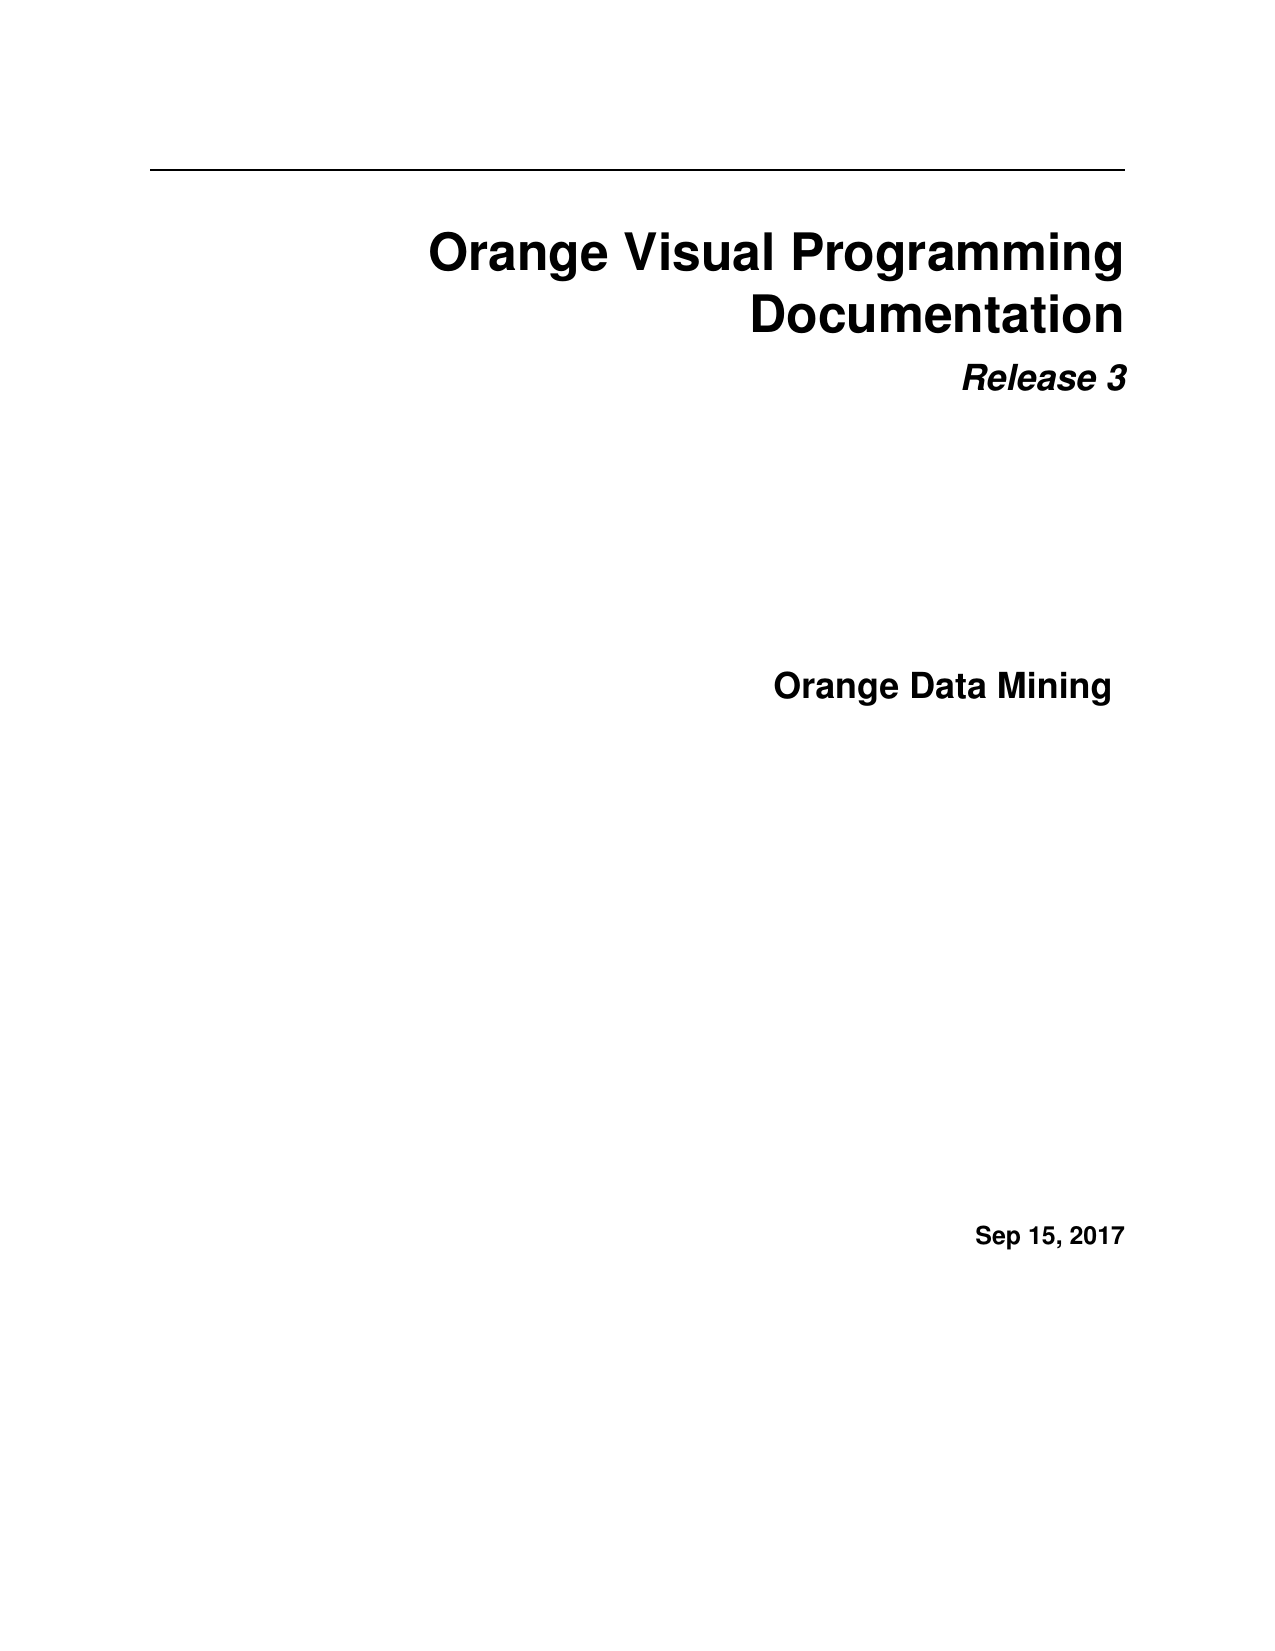 Neighbors — Orange Visual Programming 3 documentation